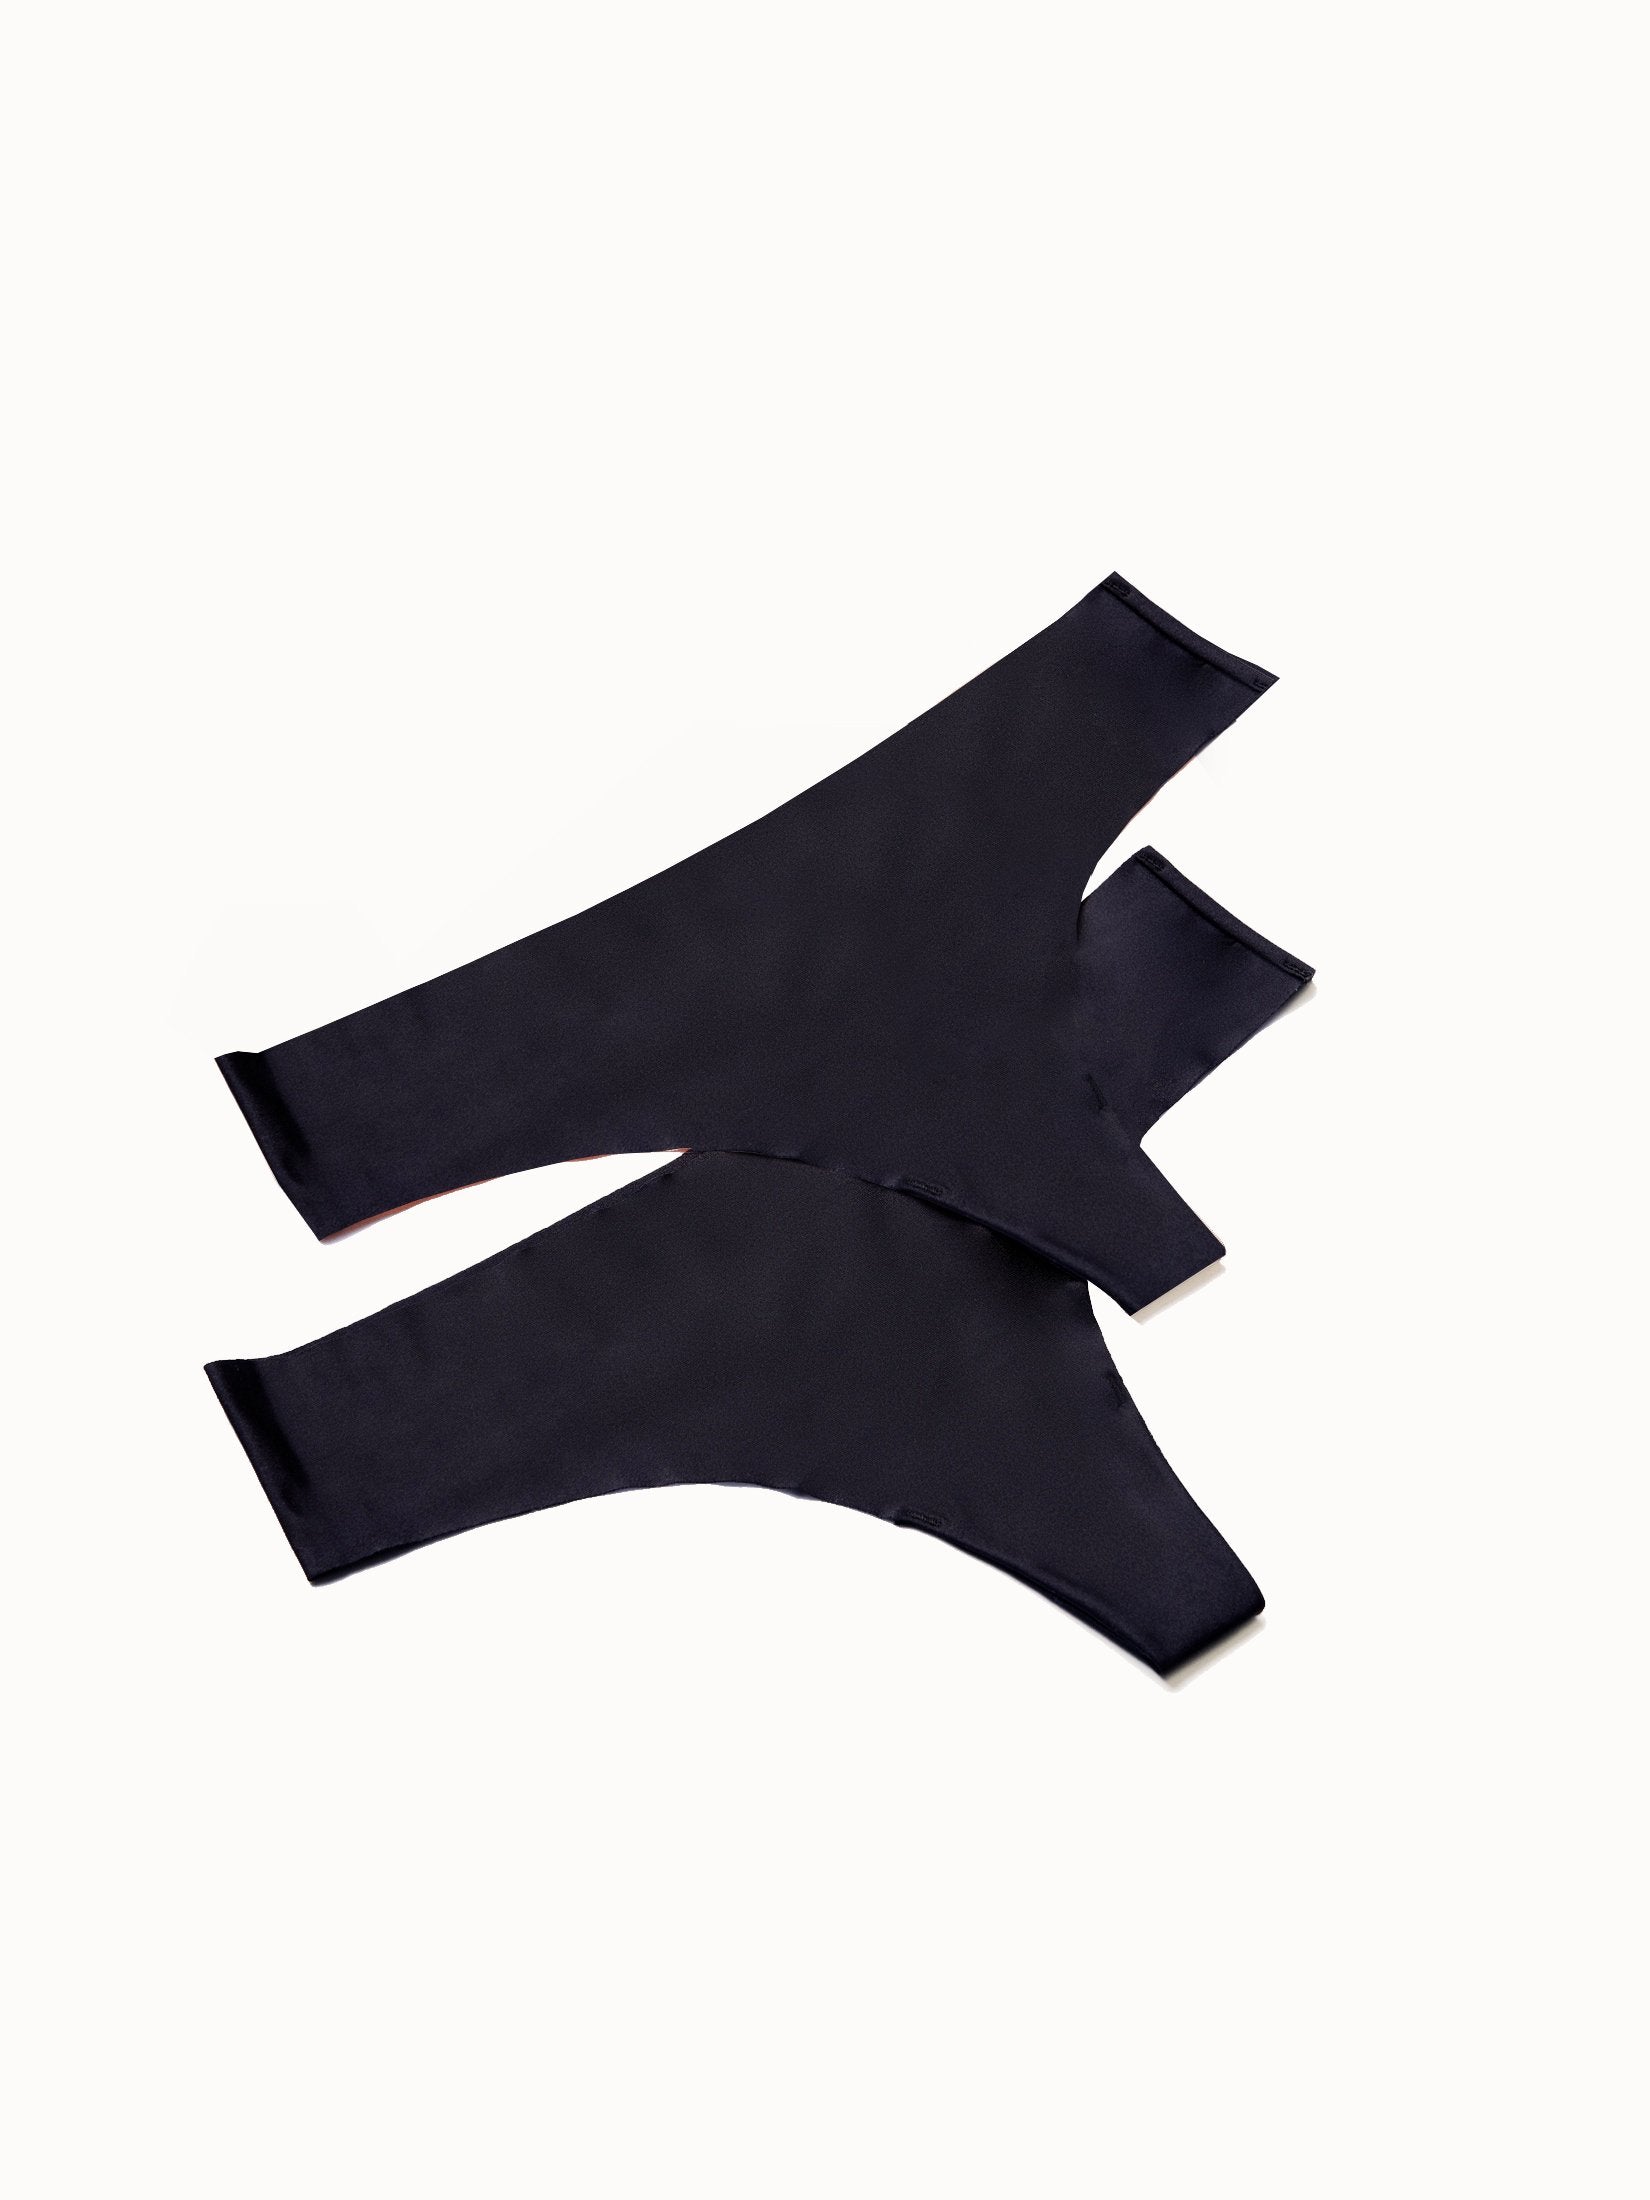 Underwear Mahi Black (2 UNITS)